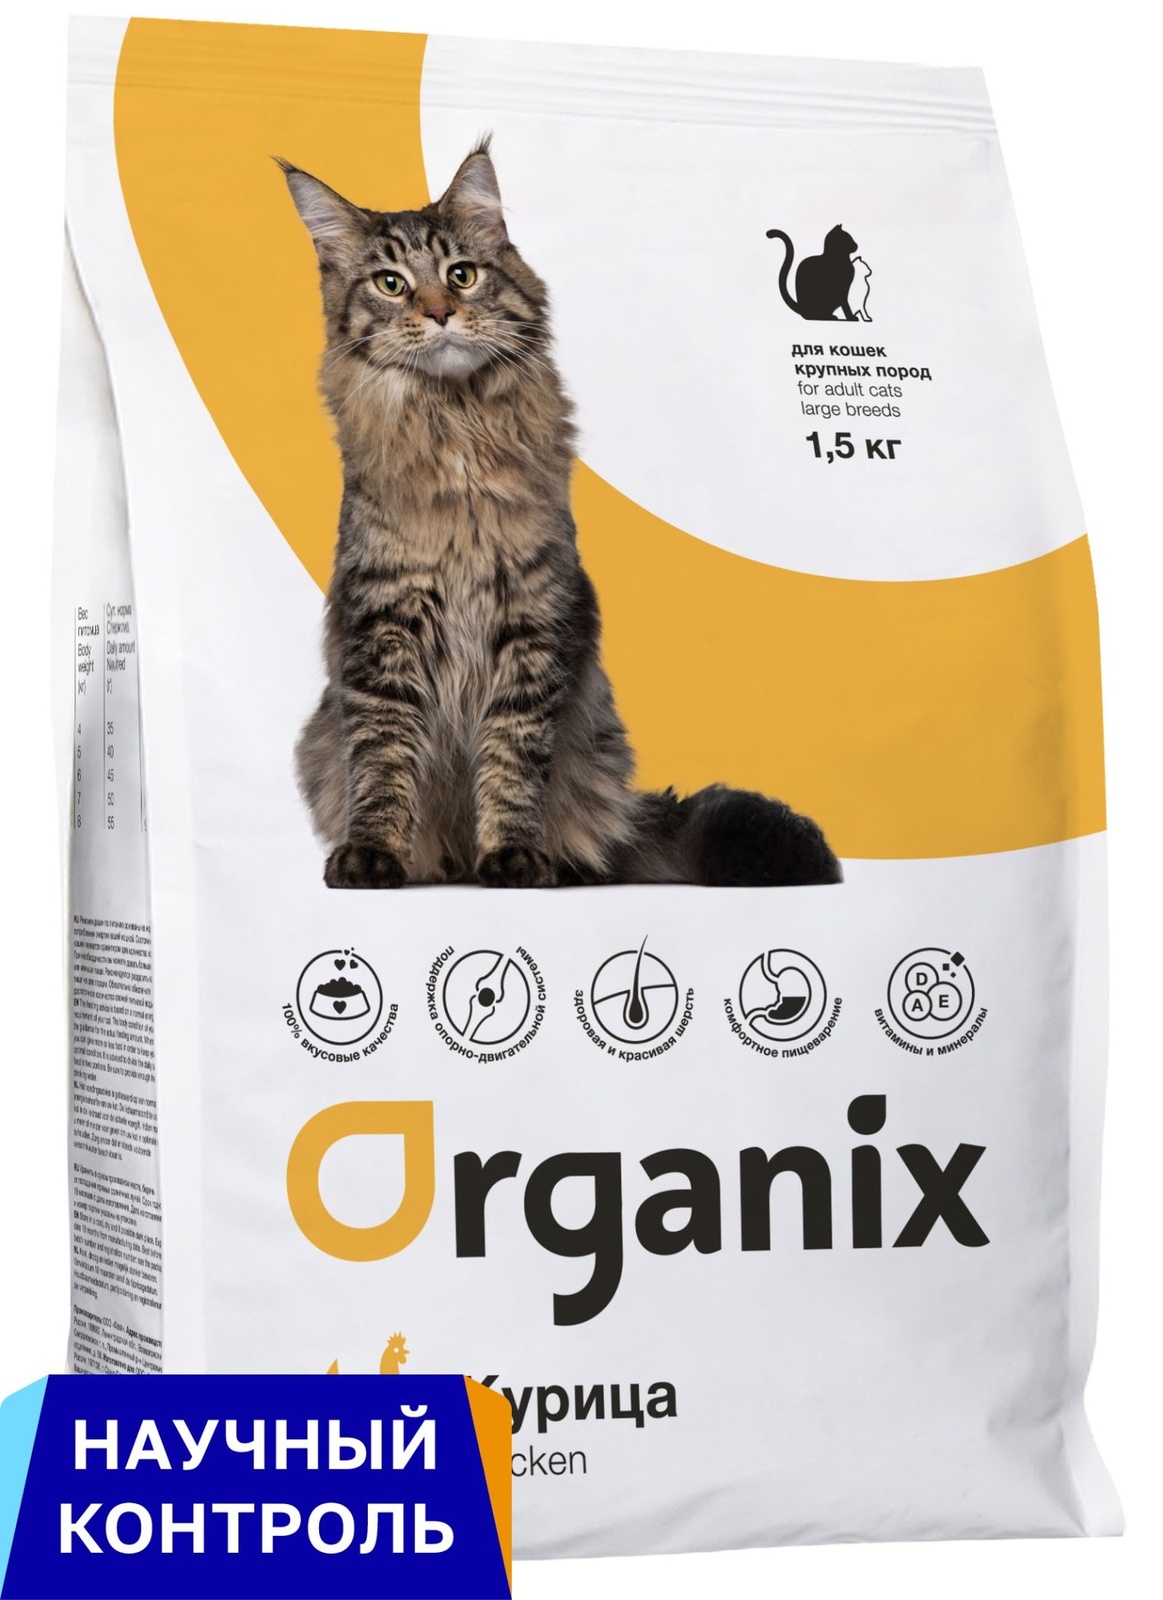 Organix  сухой корм для кошек крупных пород (800 г) Organix  сухой корм для кошек крупных пород (800 г) - фото 1